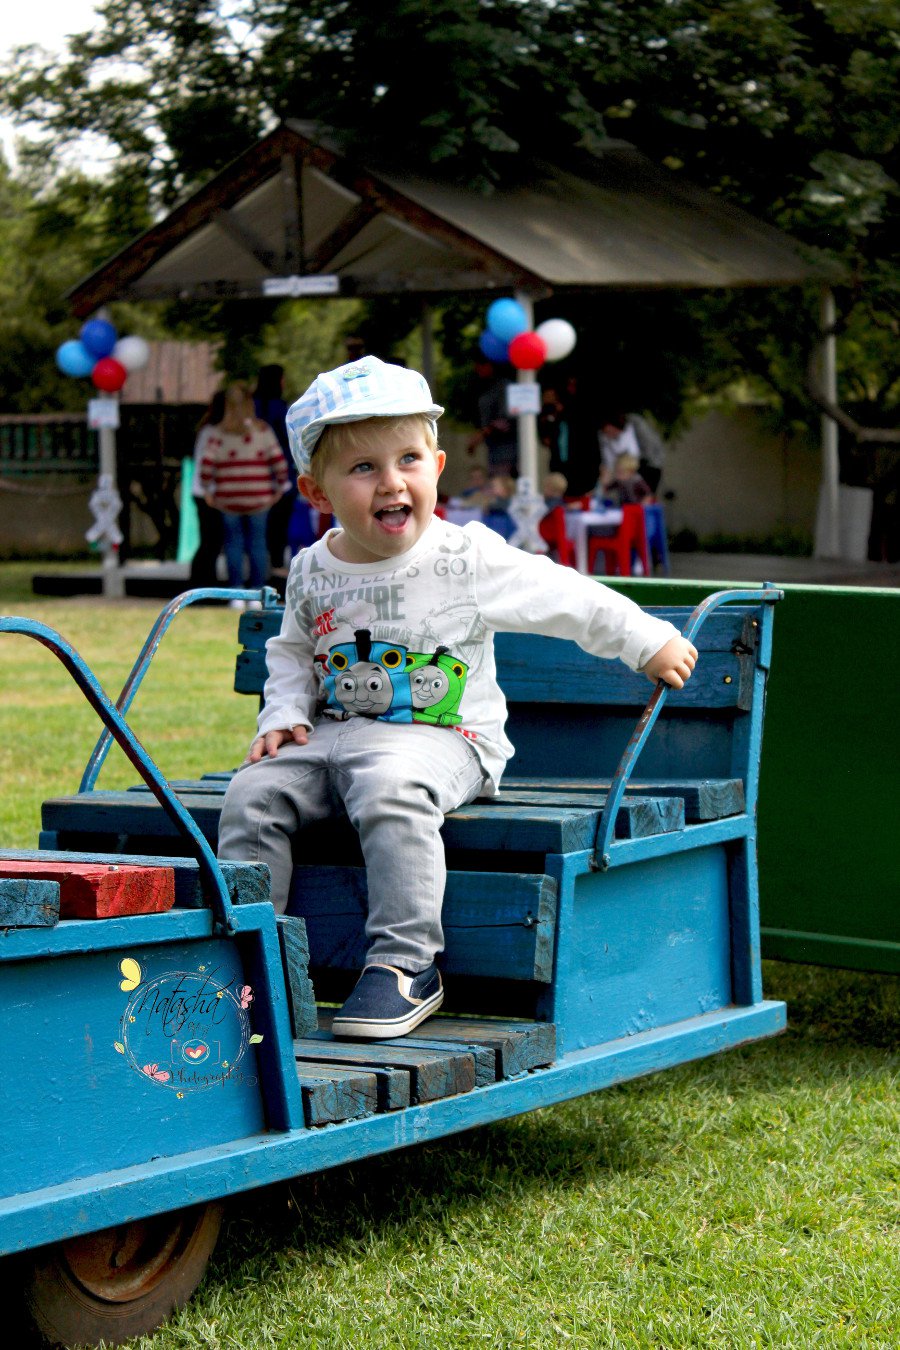 Thomas Train Party Theme Idea| Photographer| Things to do with kids